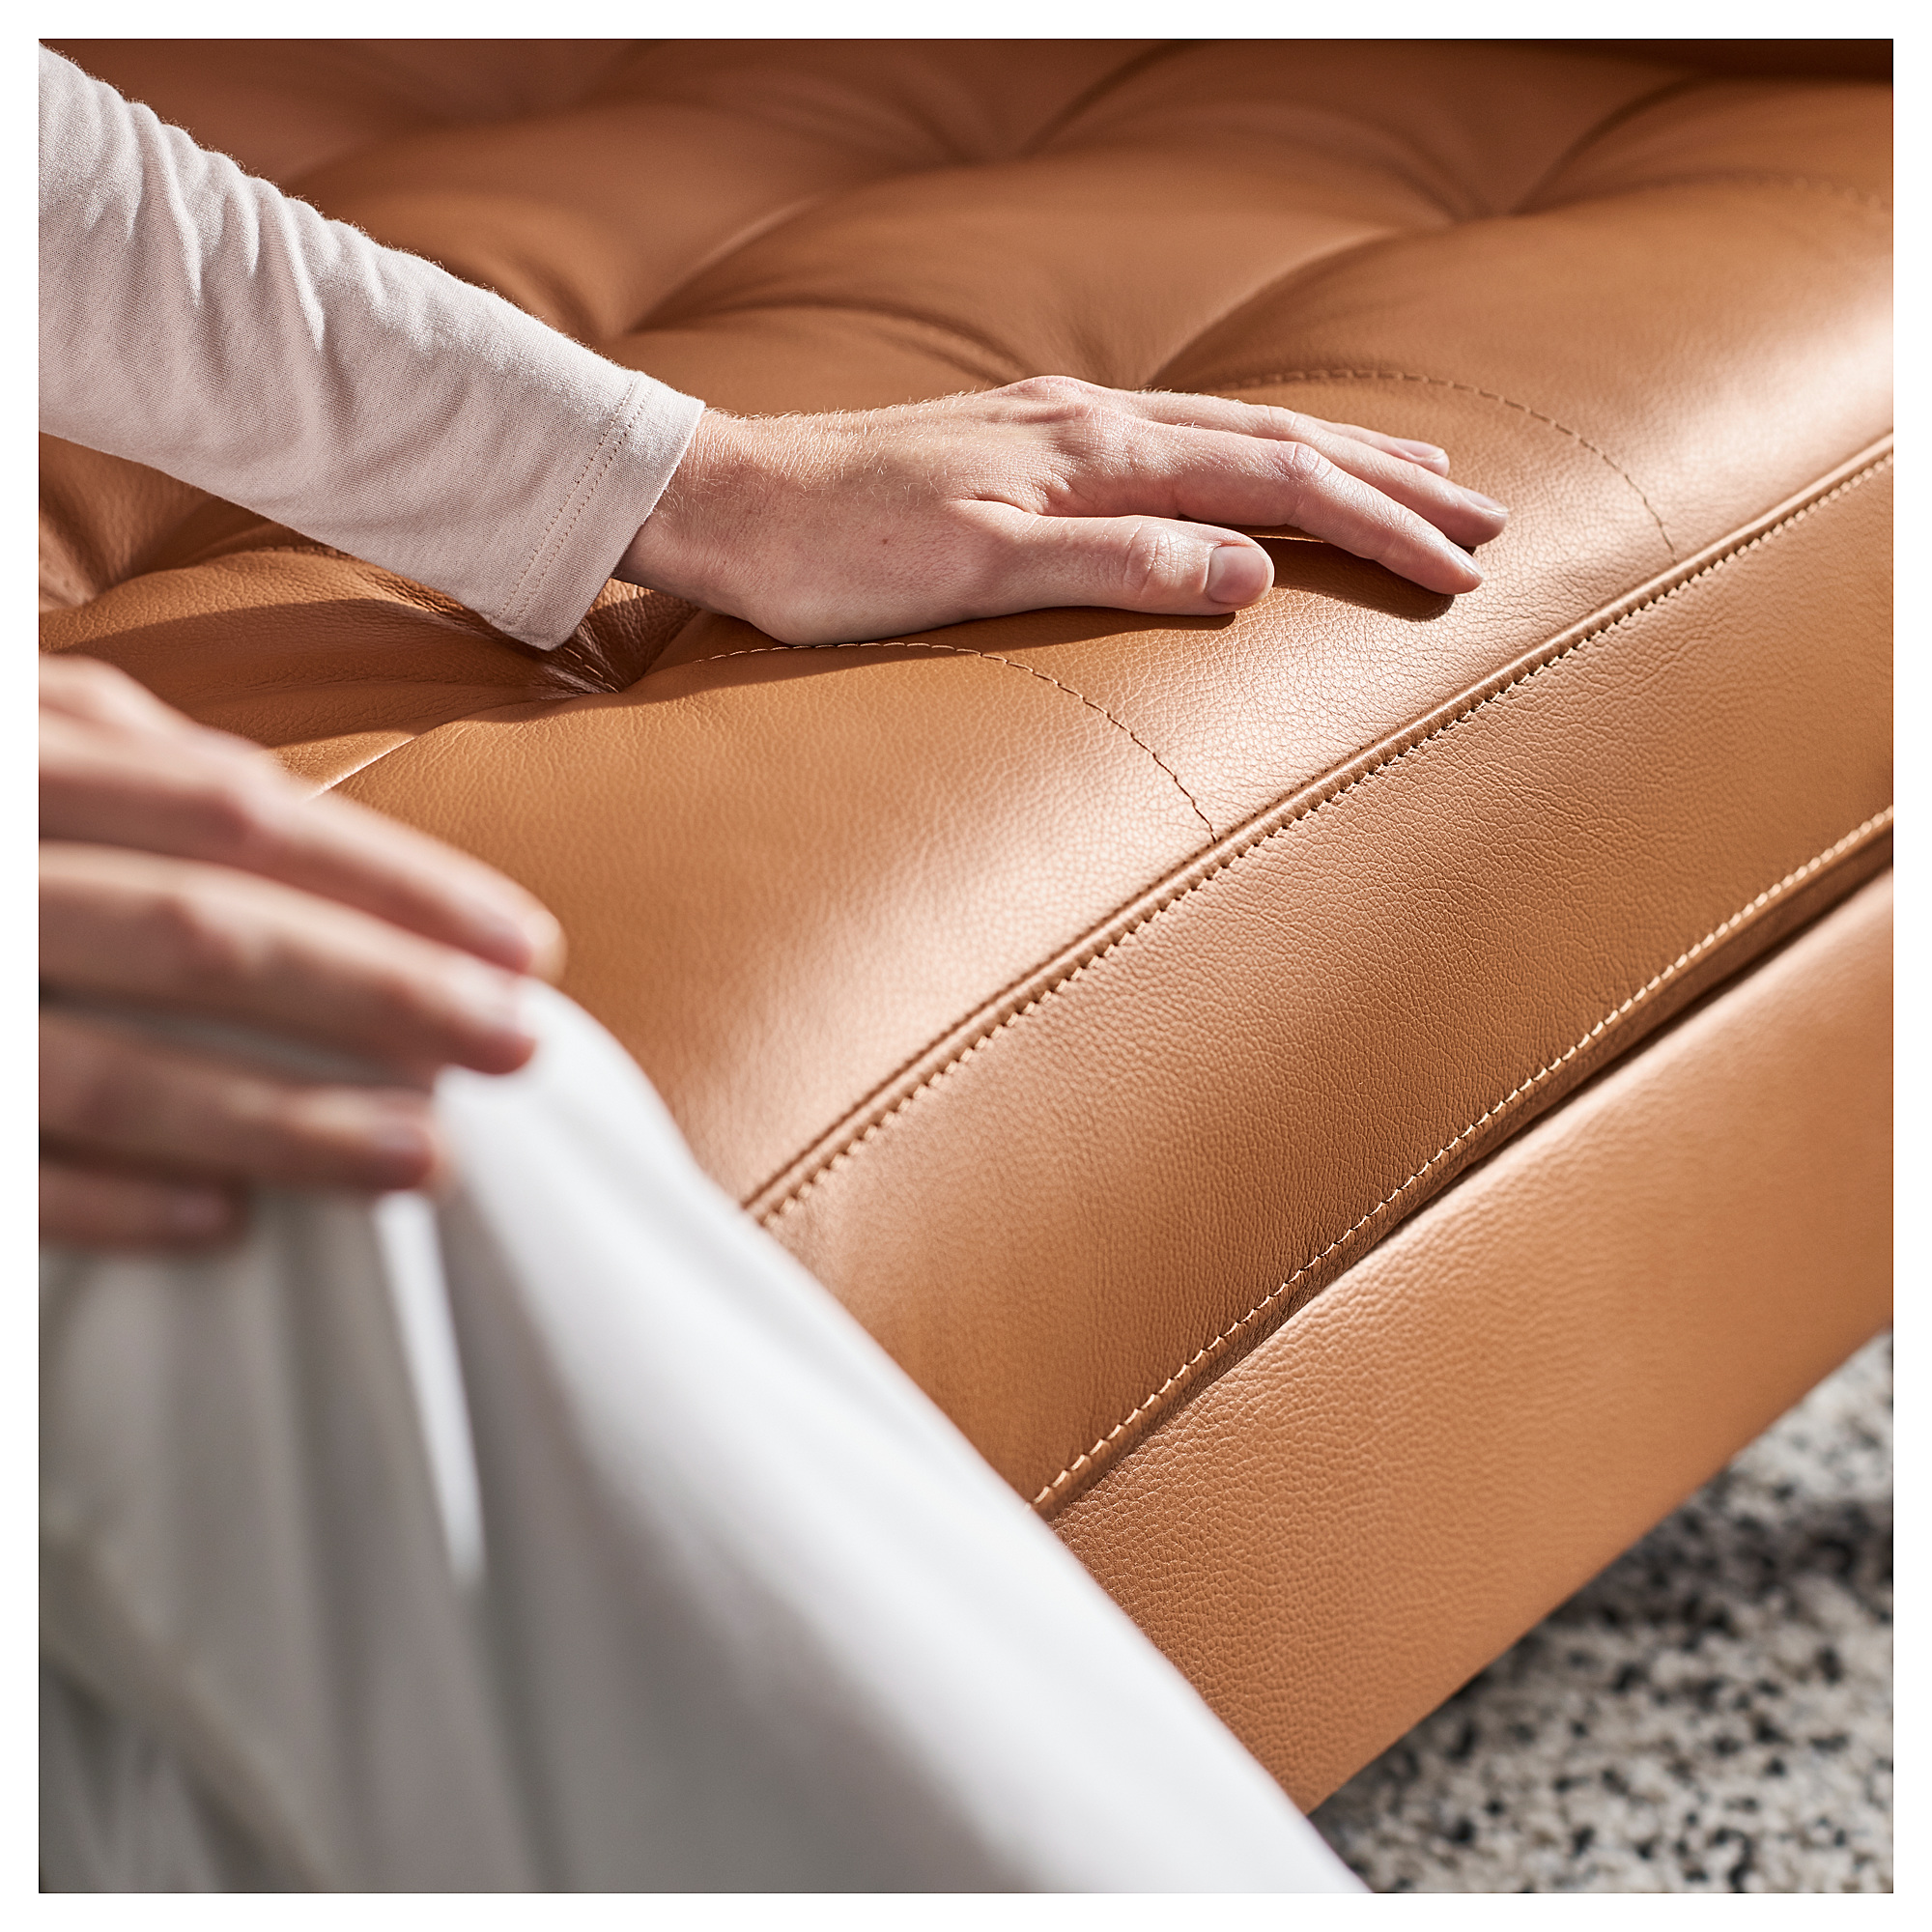 LANDSKRONA 2-seat sofa